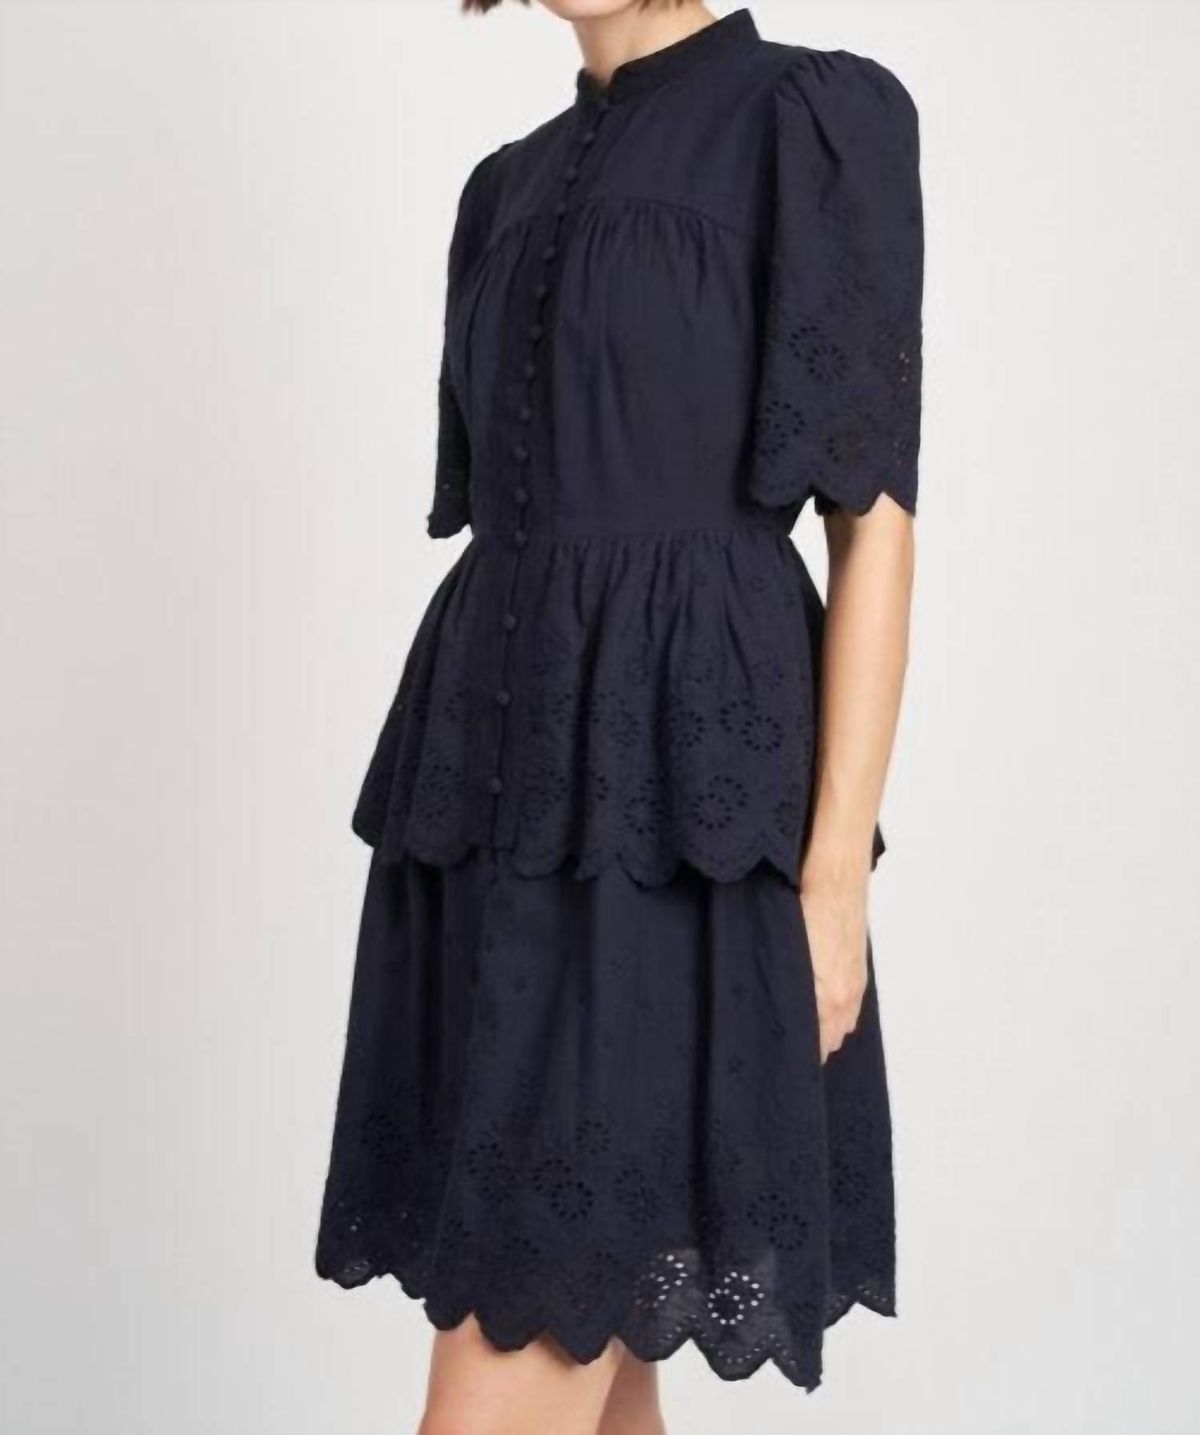 Style 1-2399236859-2901 En Saison Size M Lace Navy Black Cocktail Dress on Queenly